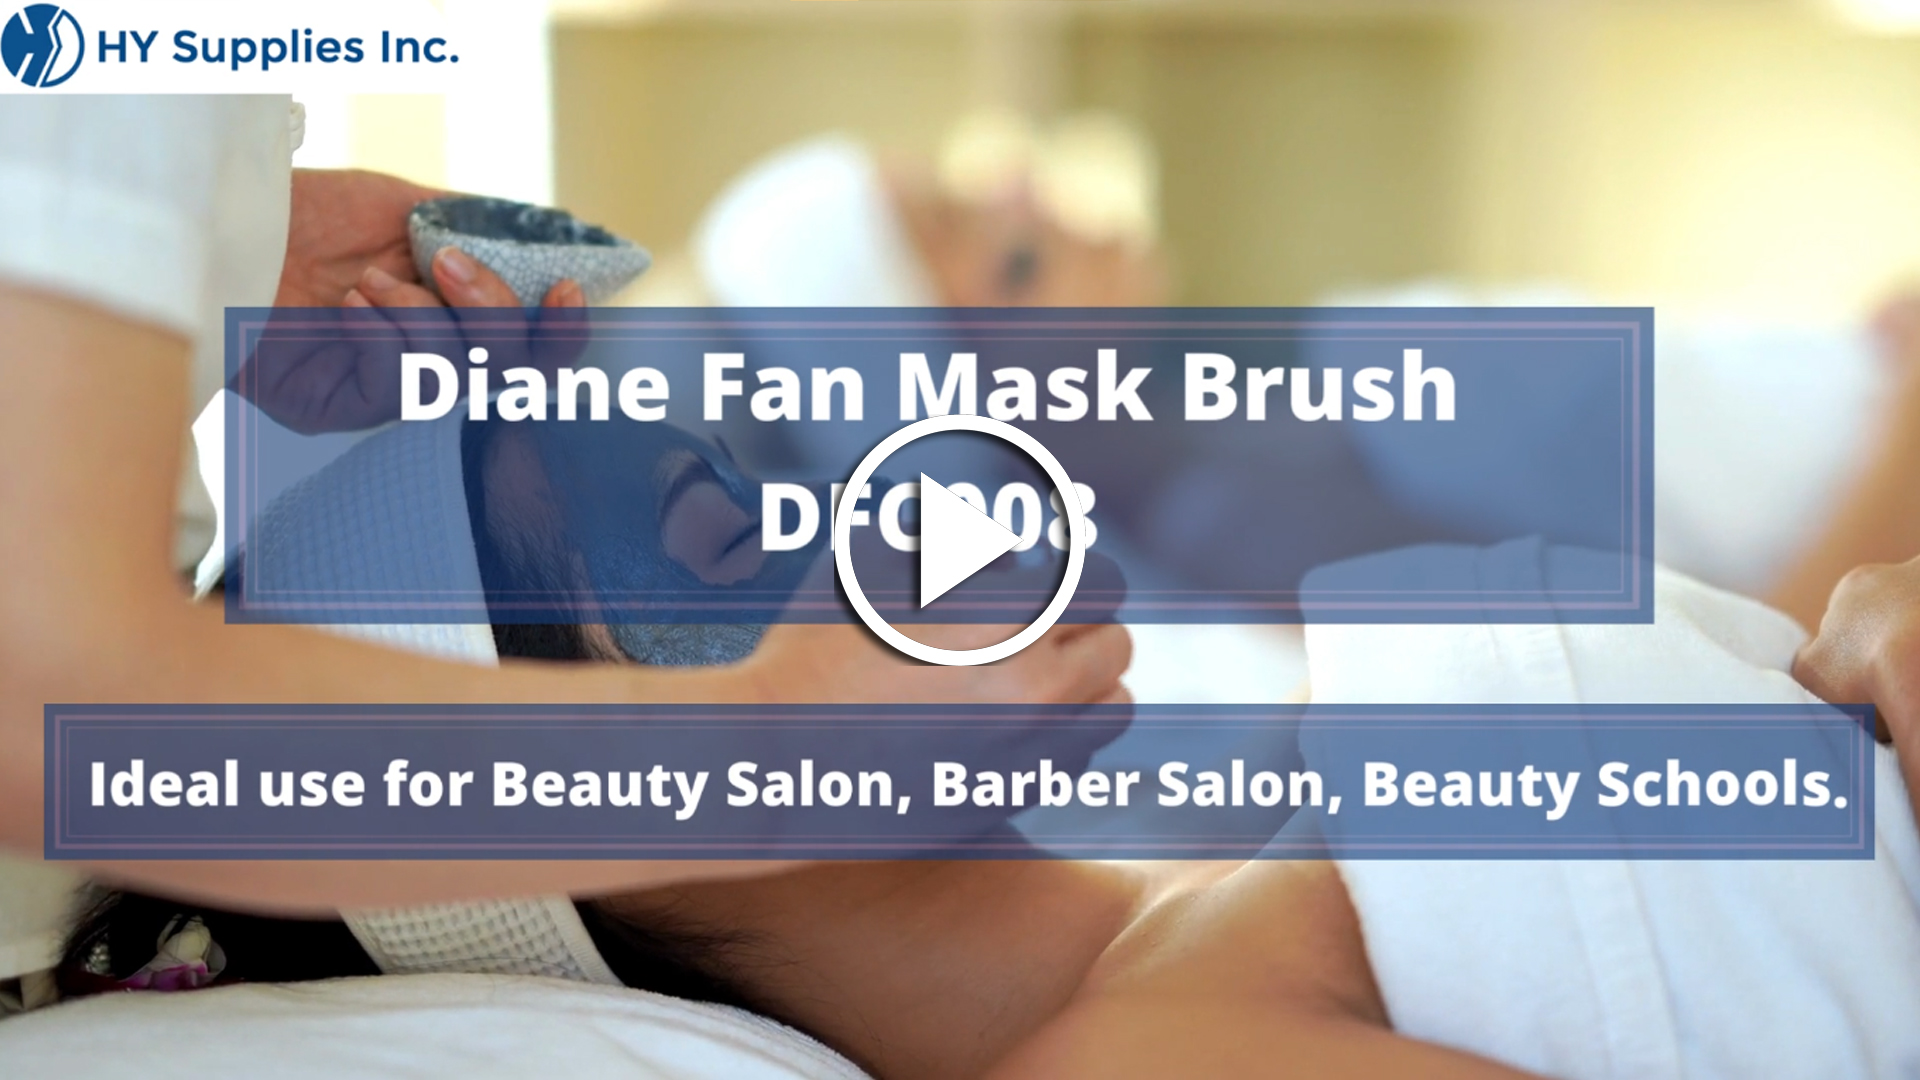 Diane Fan Mask Brush DFC008